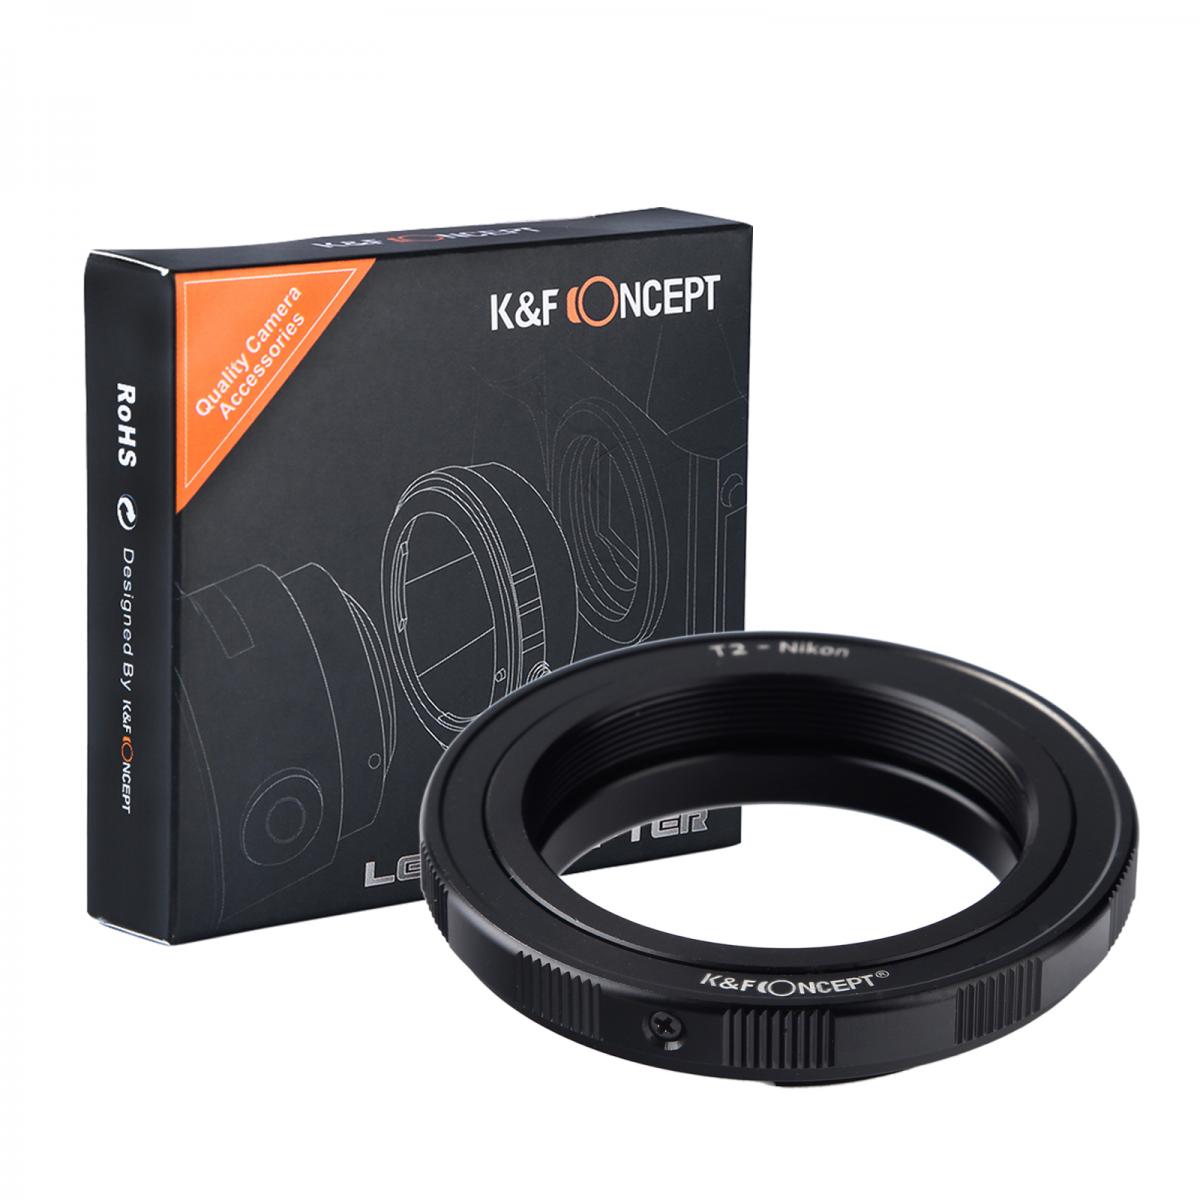 K&F Concept Adapter für T2 Objektiv auf Nikon F Mount Kamera